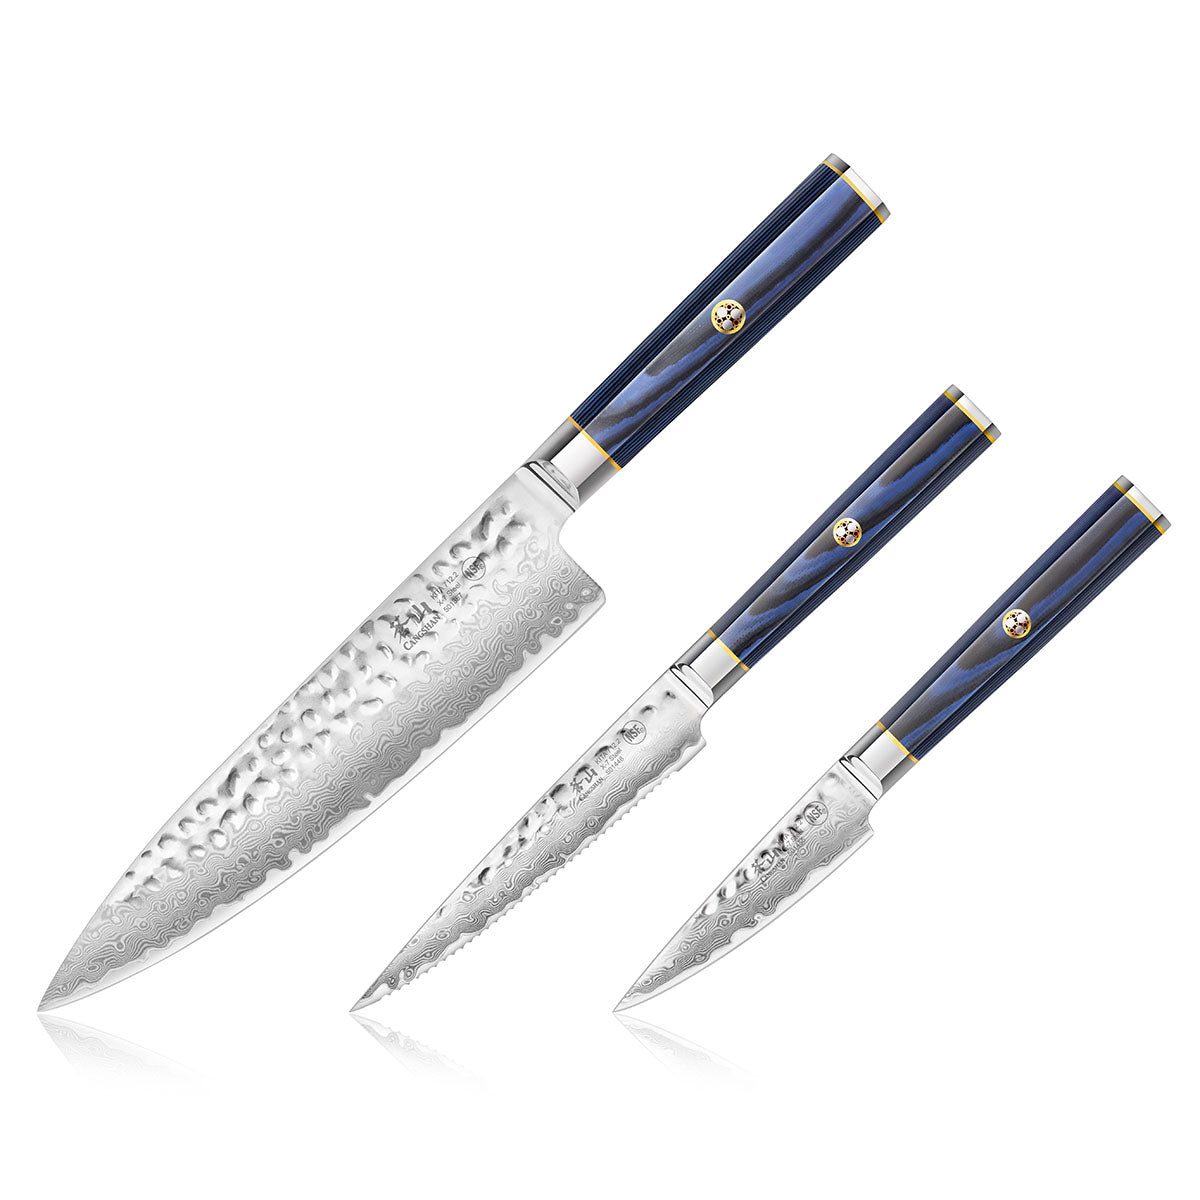 Cangshan Kita Blue Forged 6 Piece HUA Knife Block Set